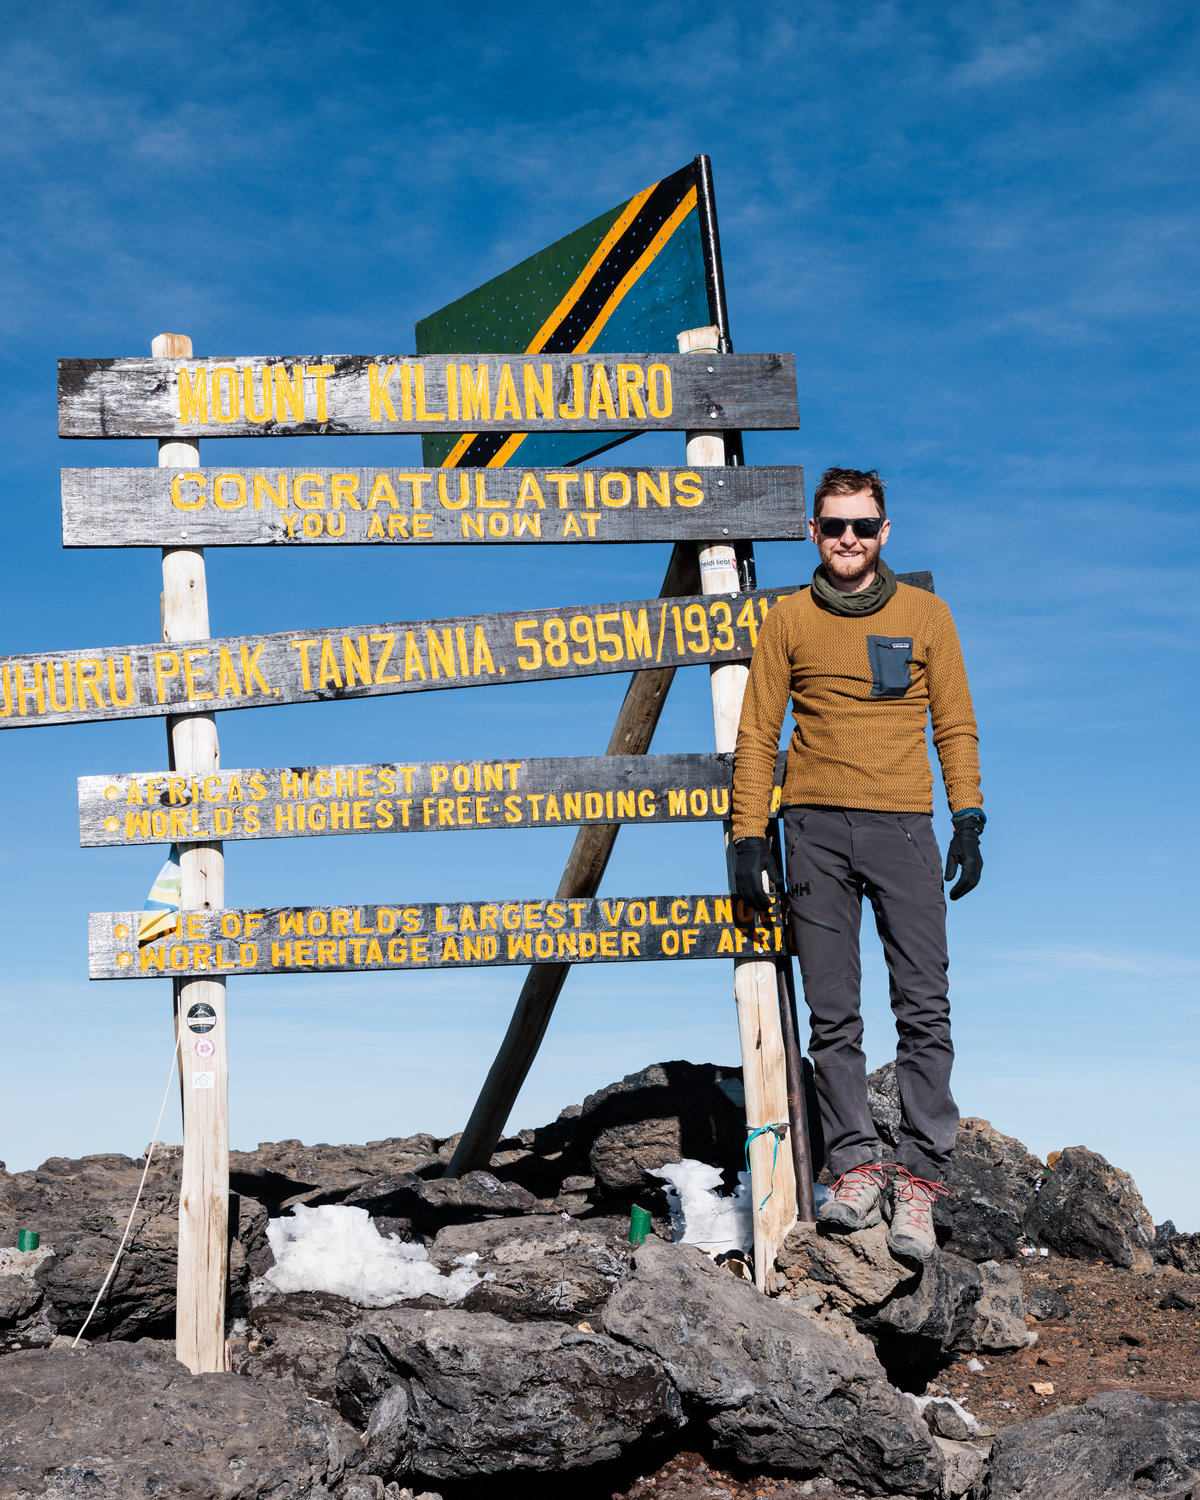 Bristol man battles Covid delays and altitude to summit Kilimanjaro ...